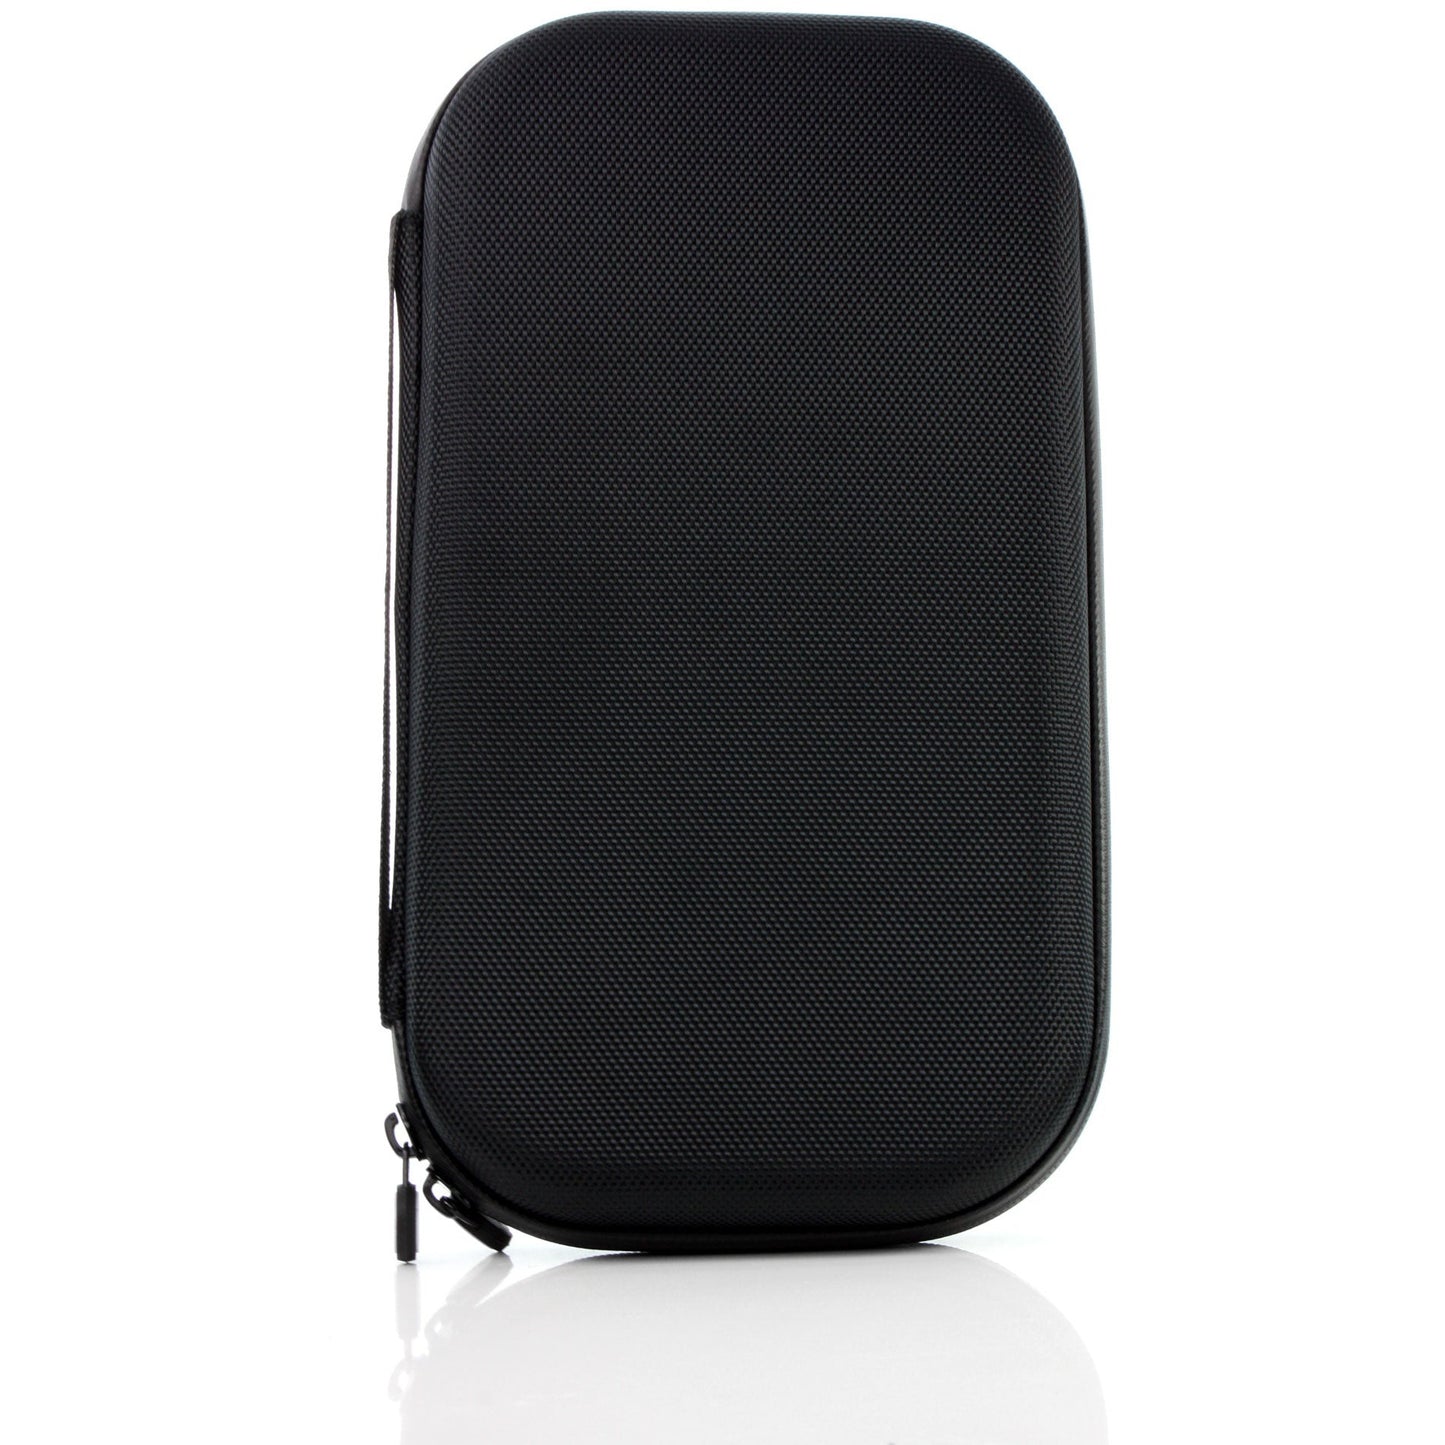 classicpod Stethoscope Case - Pod Technical Premium Classic Carry Case - Black